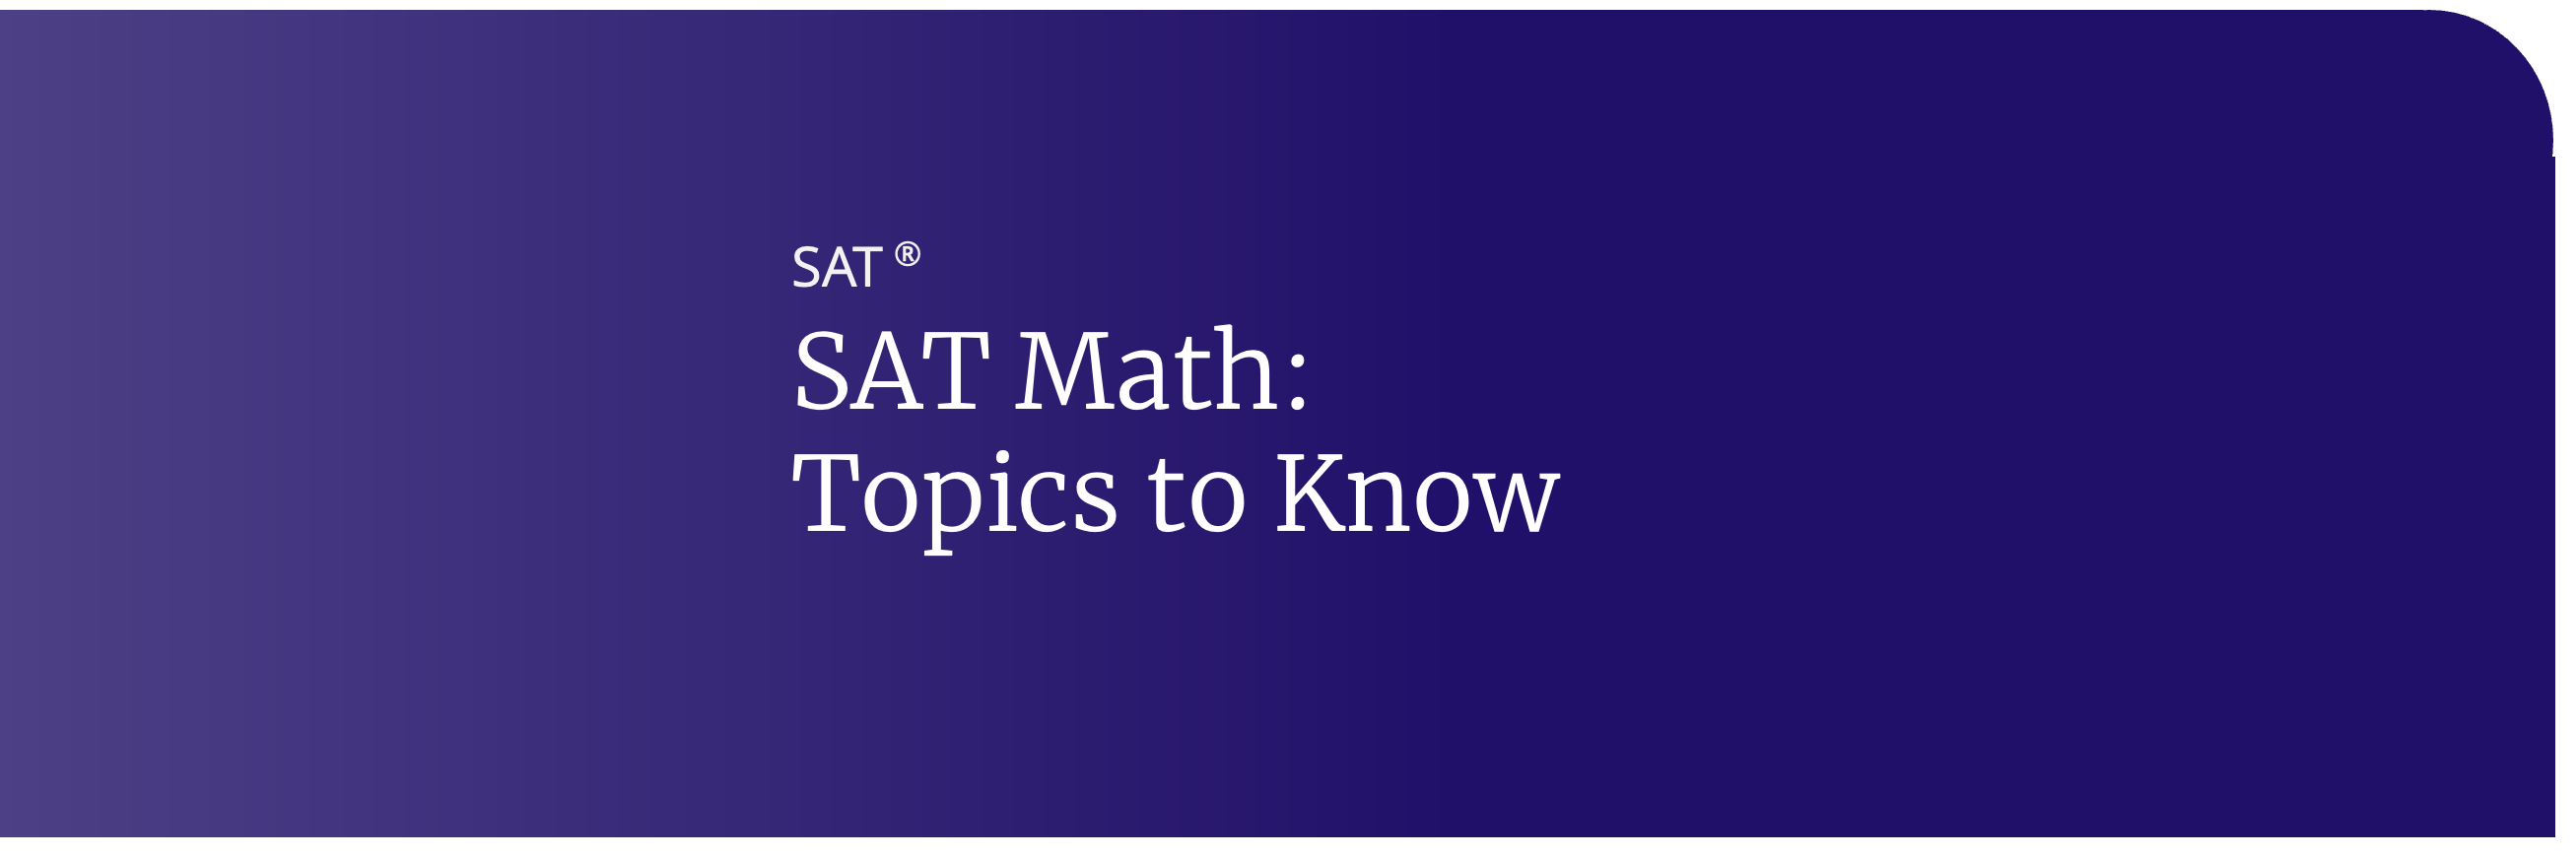 SAT Math Topics to Know